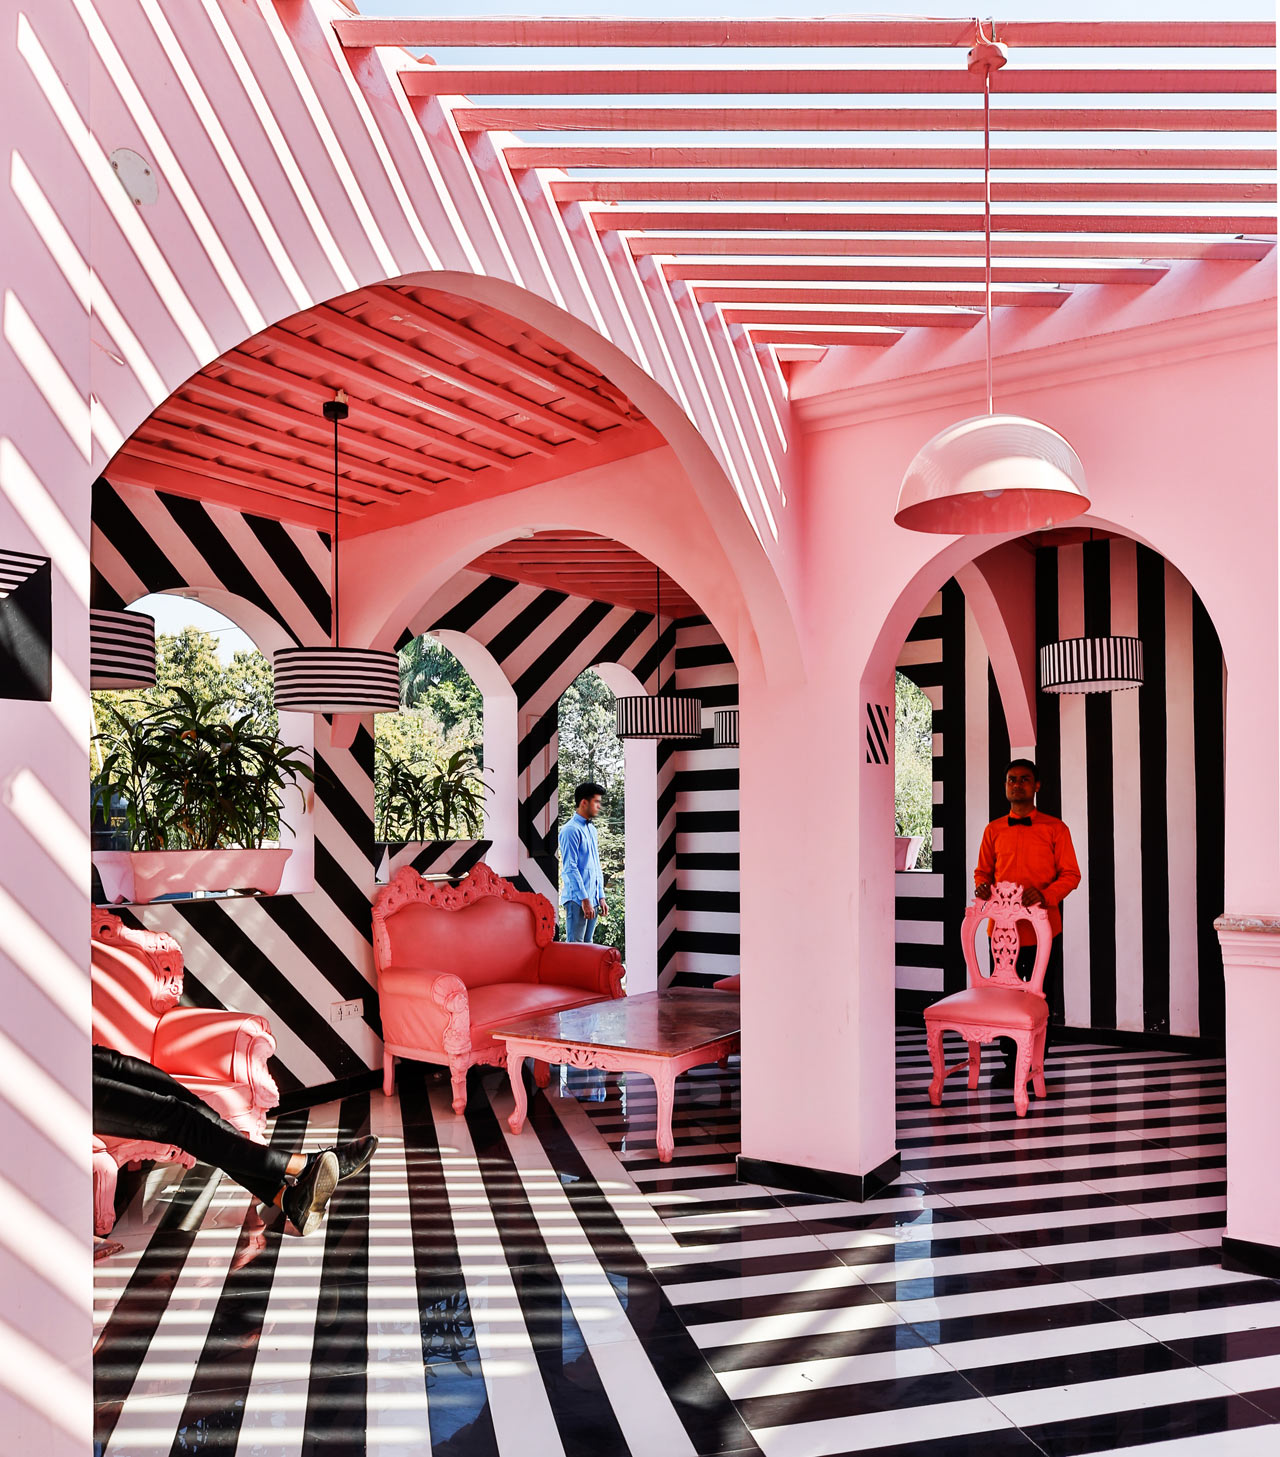 The Pink Zebra: An Eye-Popping Restaurant/Bar Inspired by the Work